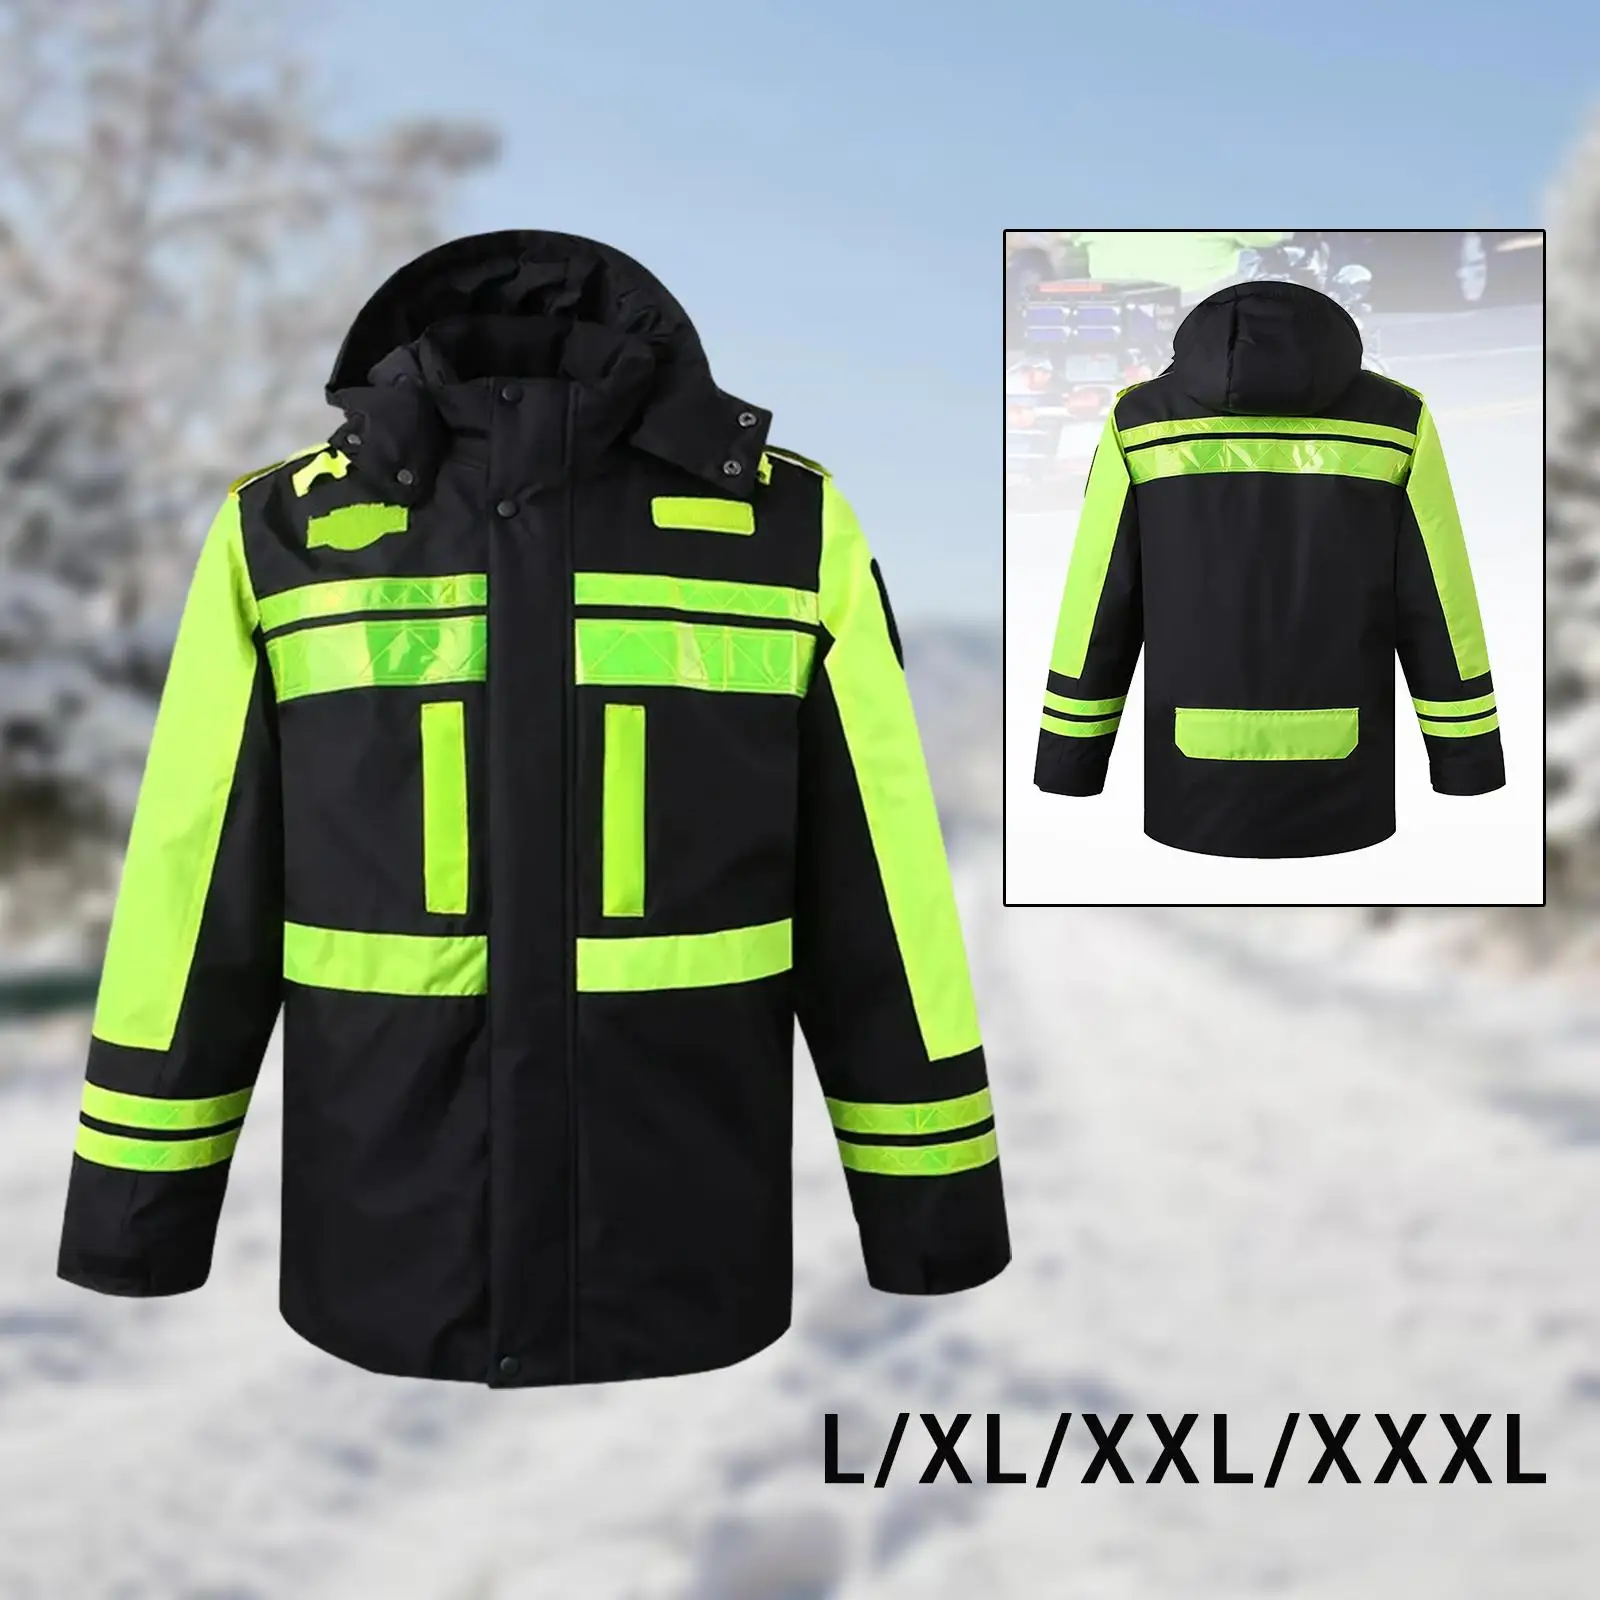 Winter Safety Jacket Rain Coat Warm Detachable Liner Reflective Work Jacket Construction Coat for Construction Cycling Bike